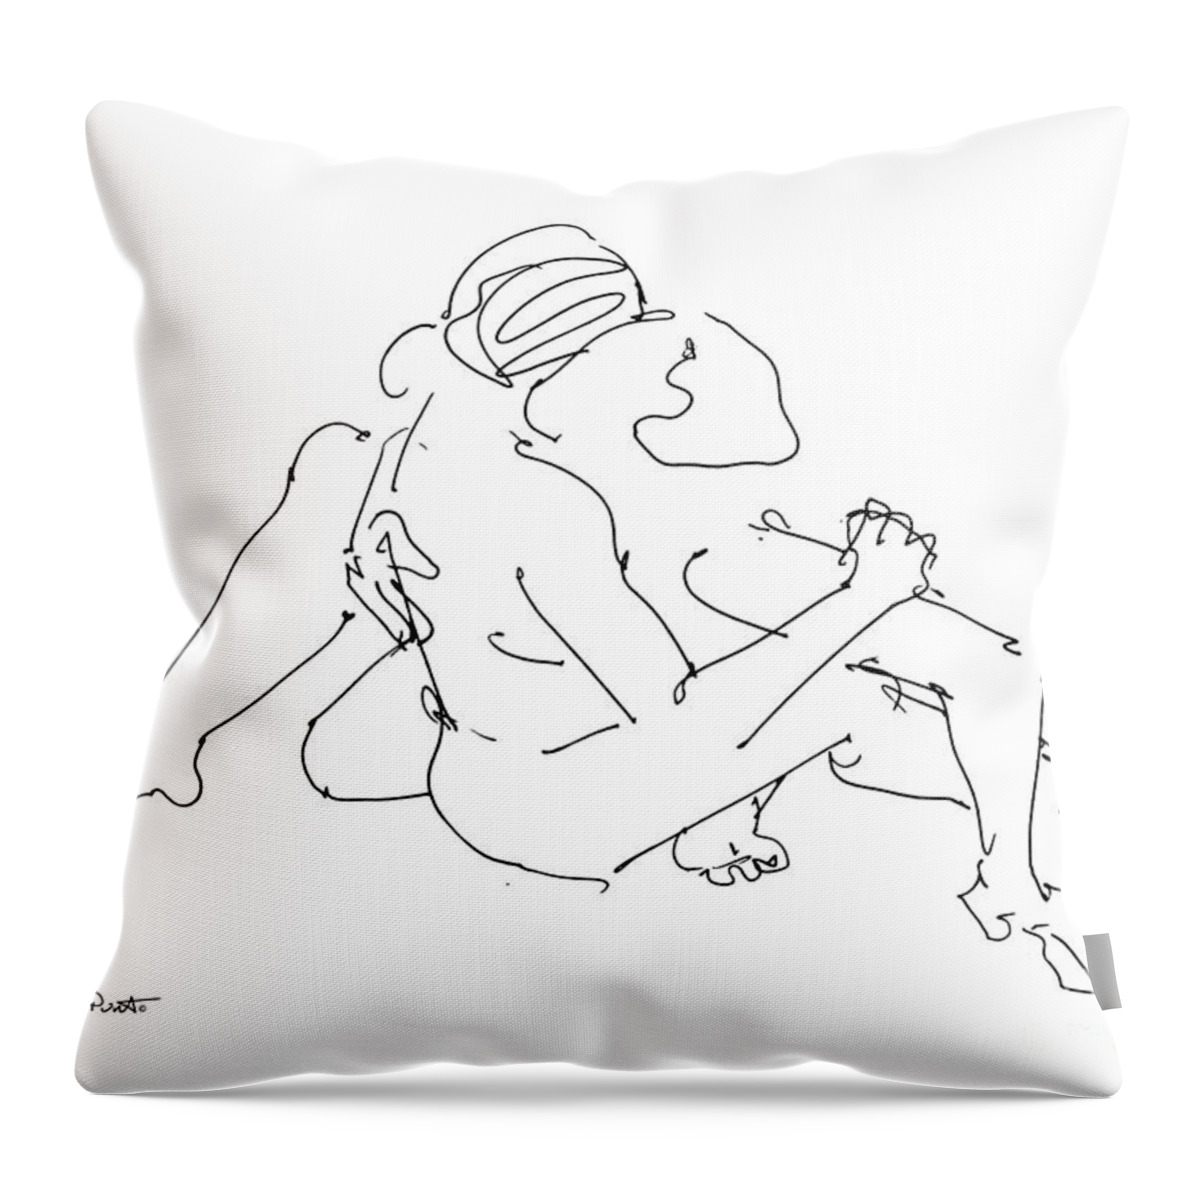 Erotic Renderings Throw Pillow featuring the drawing Erotic Art Drawings 11 by Gordon Punt